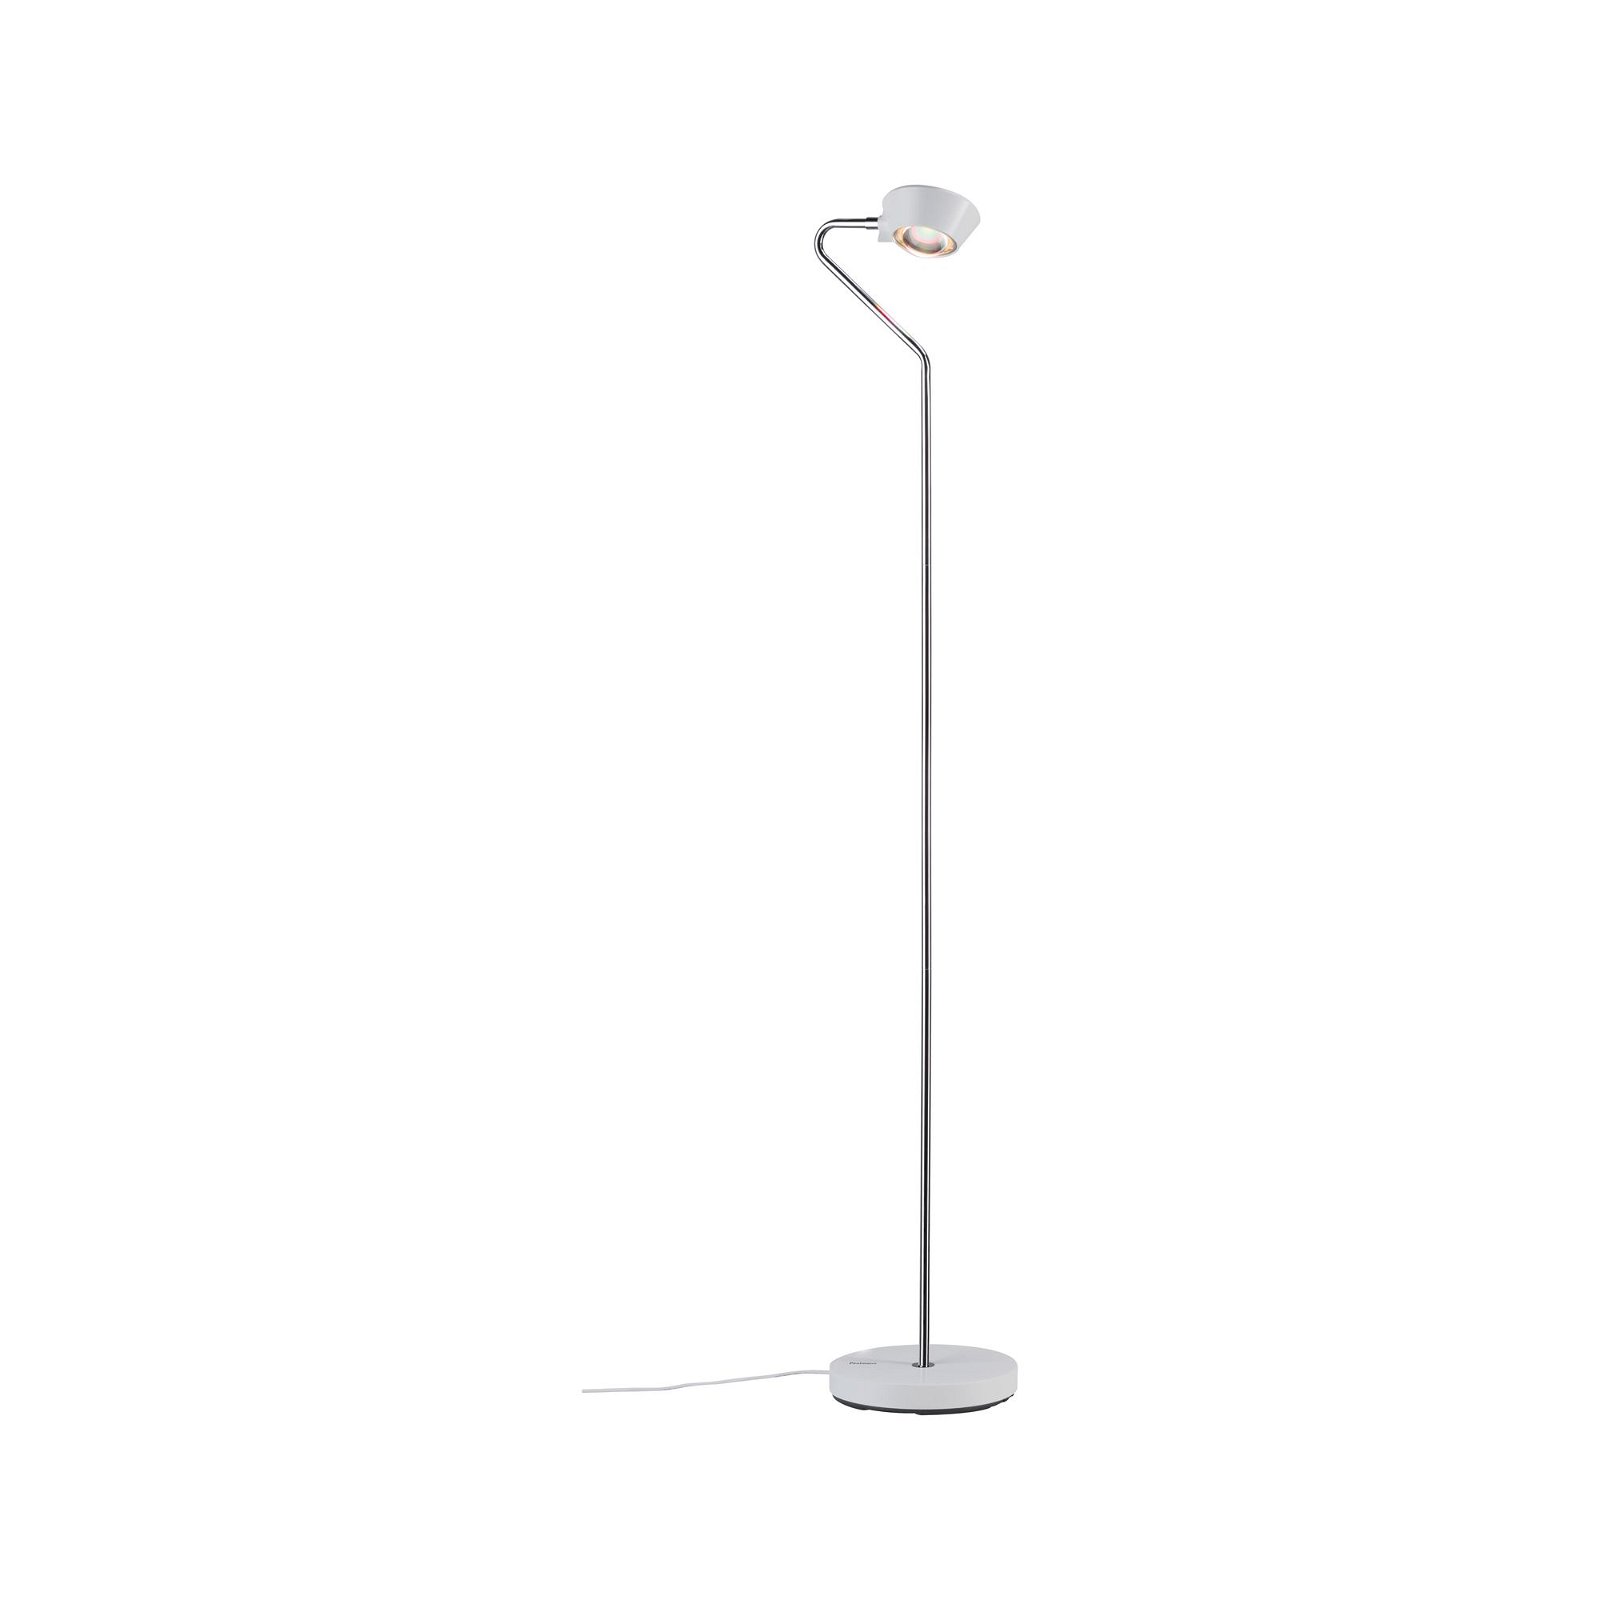 Staande LED-lamp 3-Step-Dim Ramos 2700K 840lm / 320lm 7,5 / 1x3,5W Wit mat/Chroom